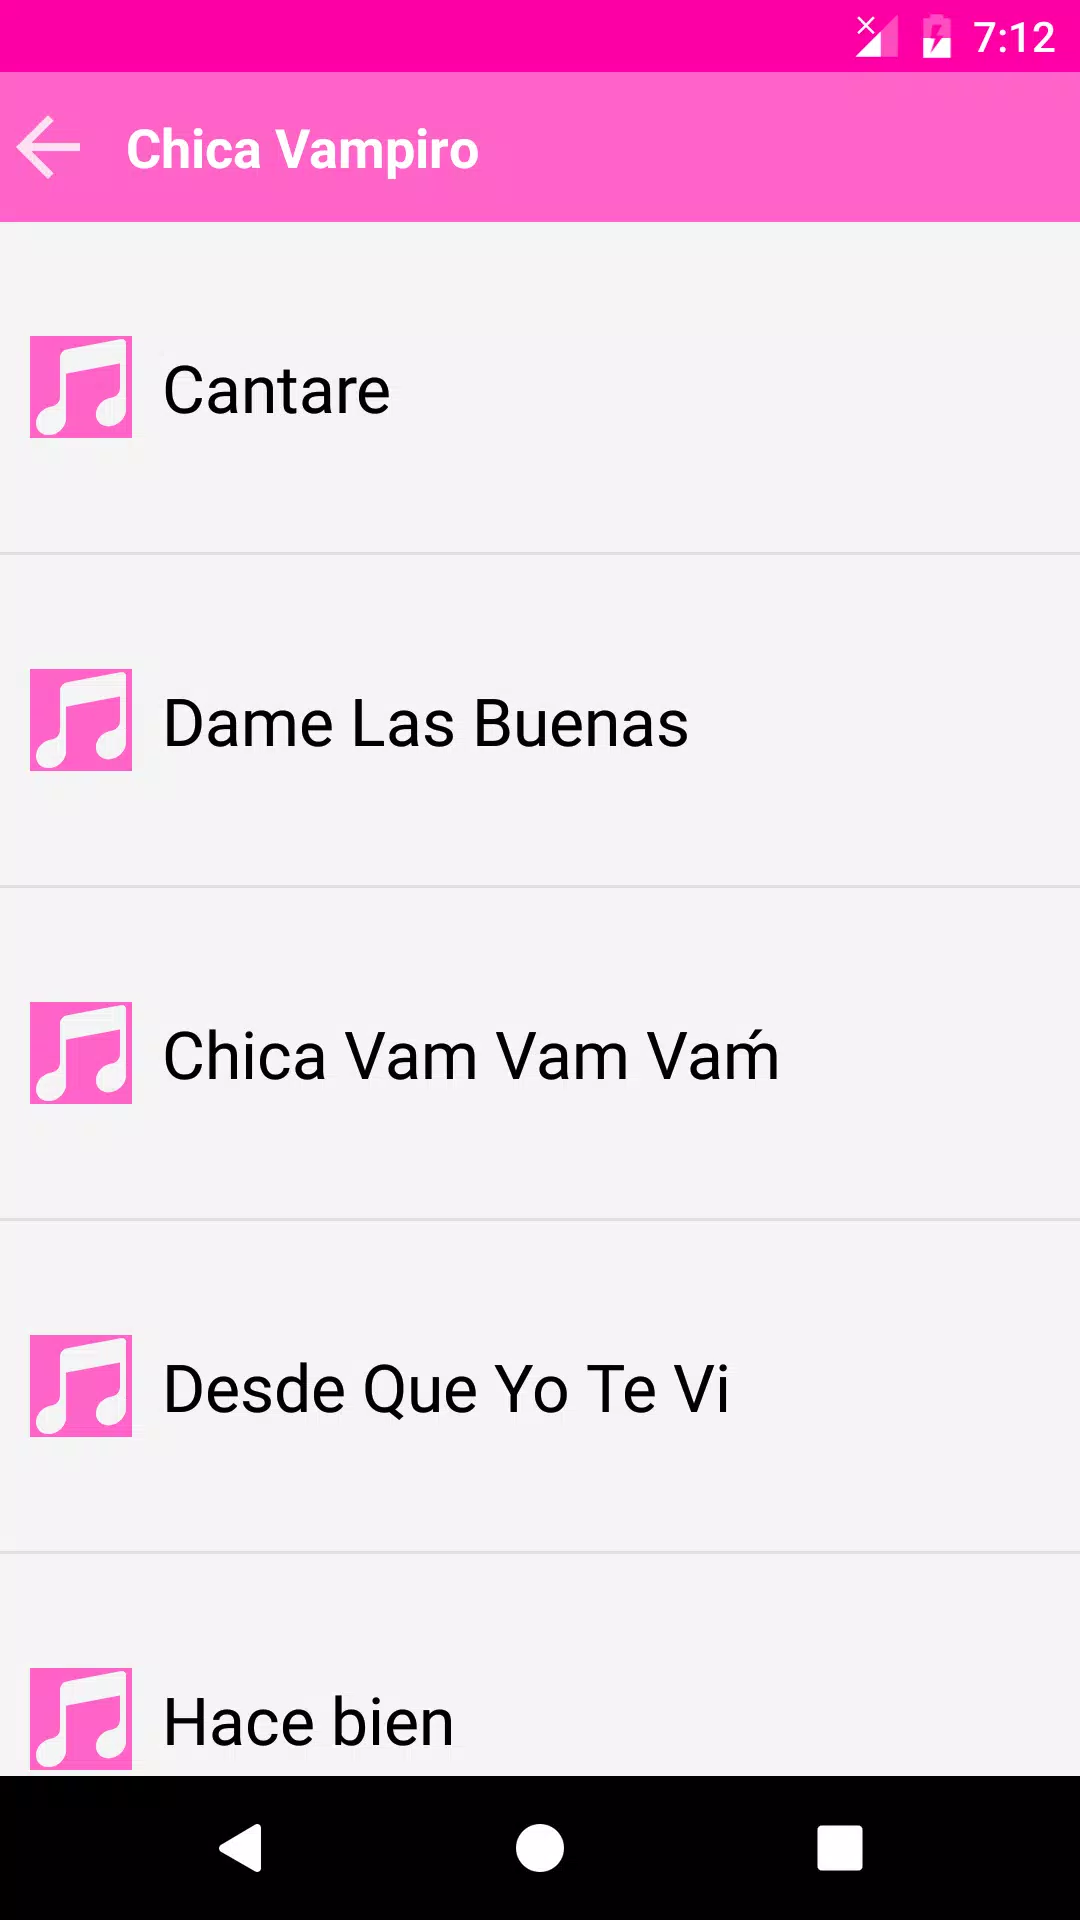 Chica Vampiro musica lyrics APK for Android Download